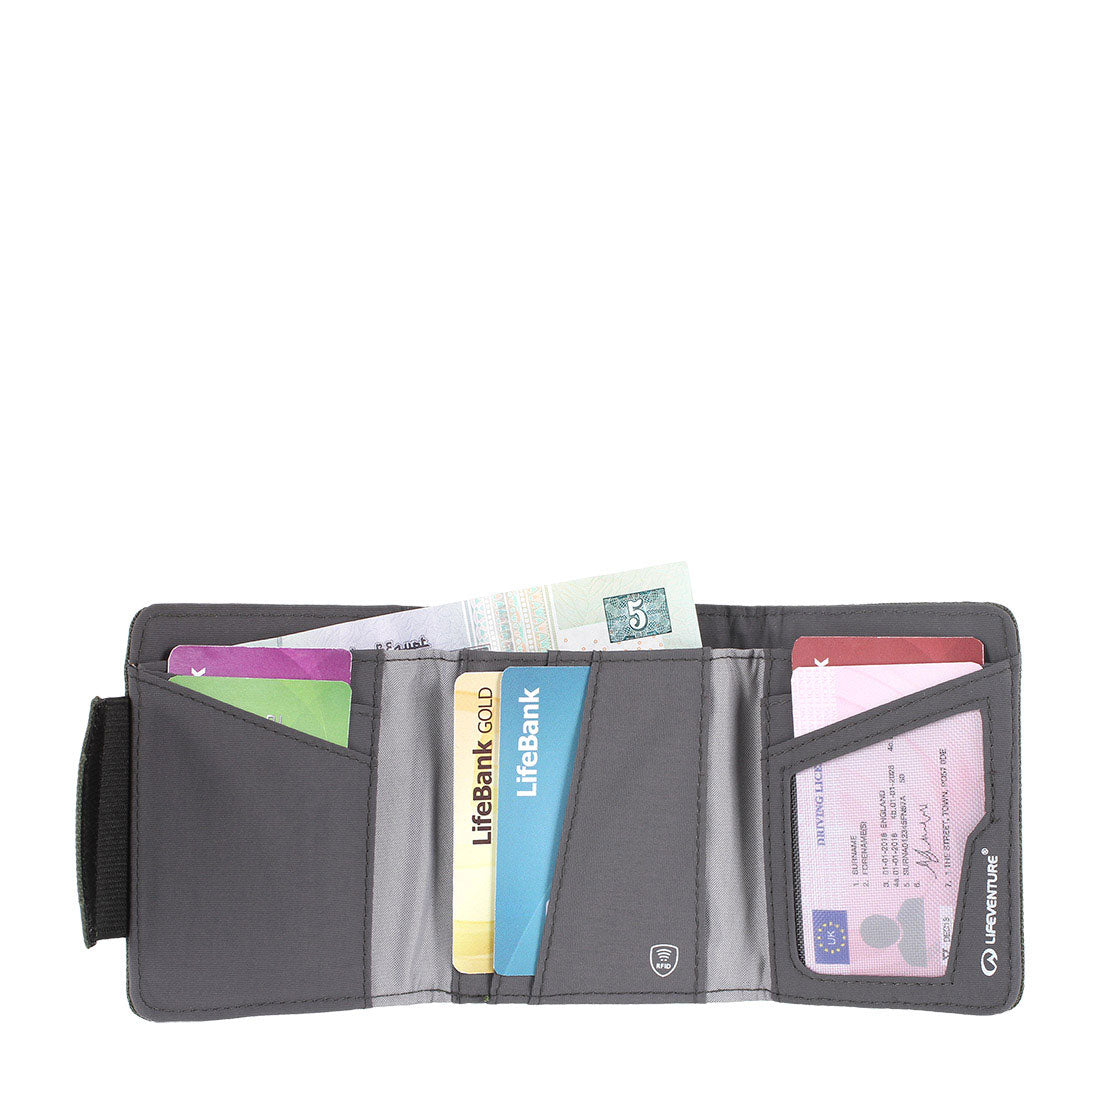 RFiD Wallet, RFiD Blocking Wallet